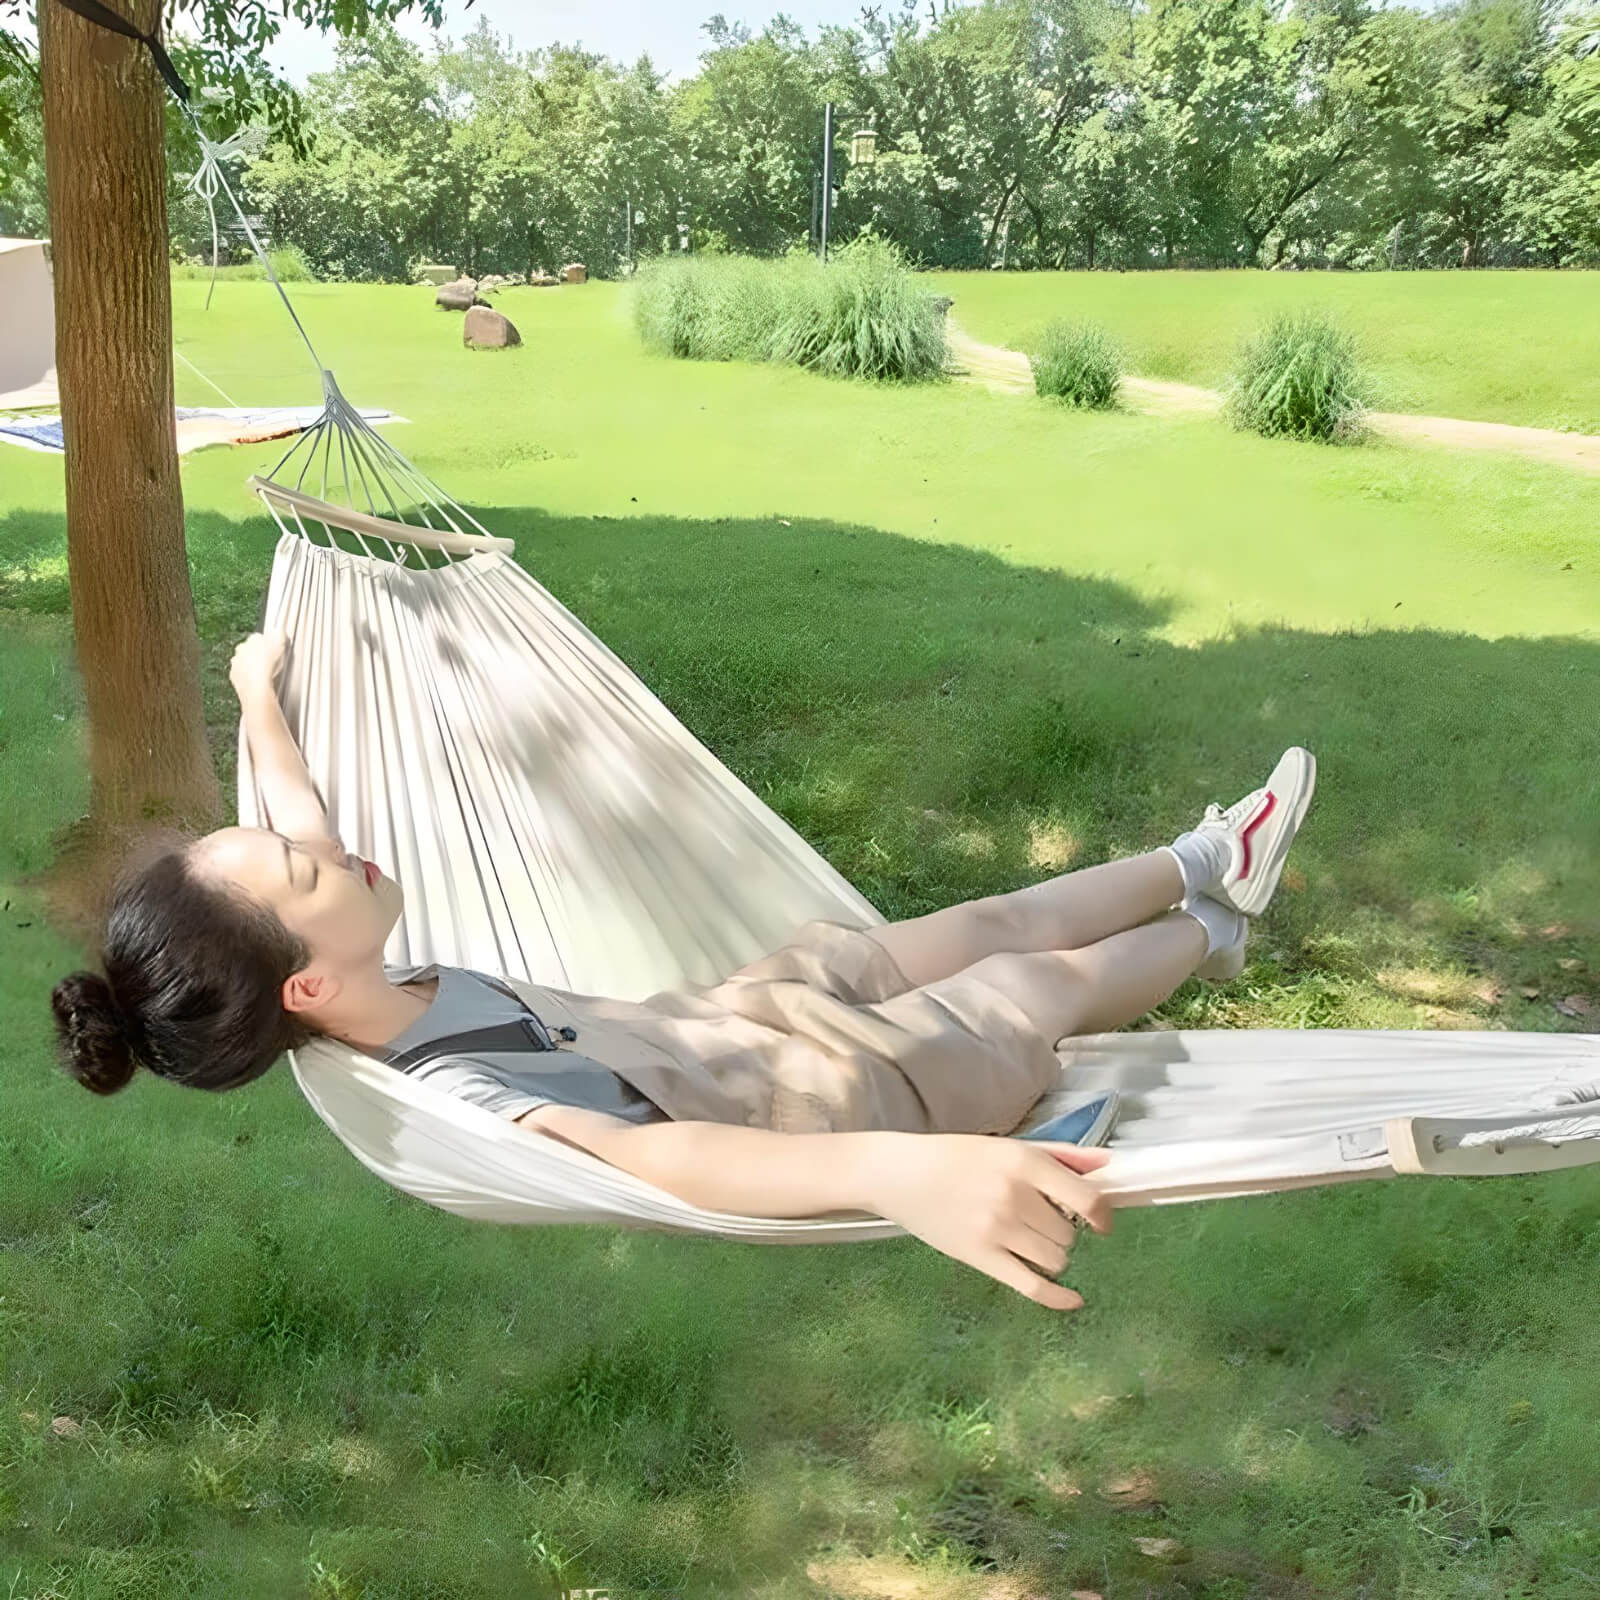 camping-hammock-girl-laying-in-hammock